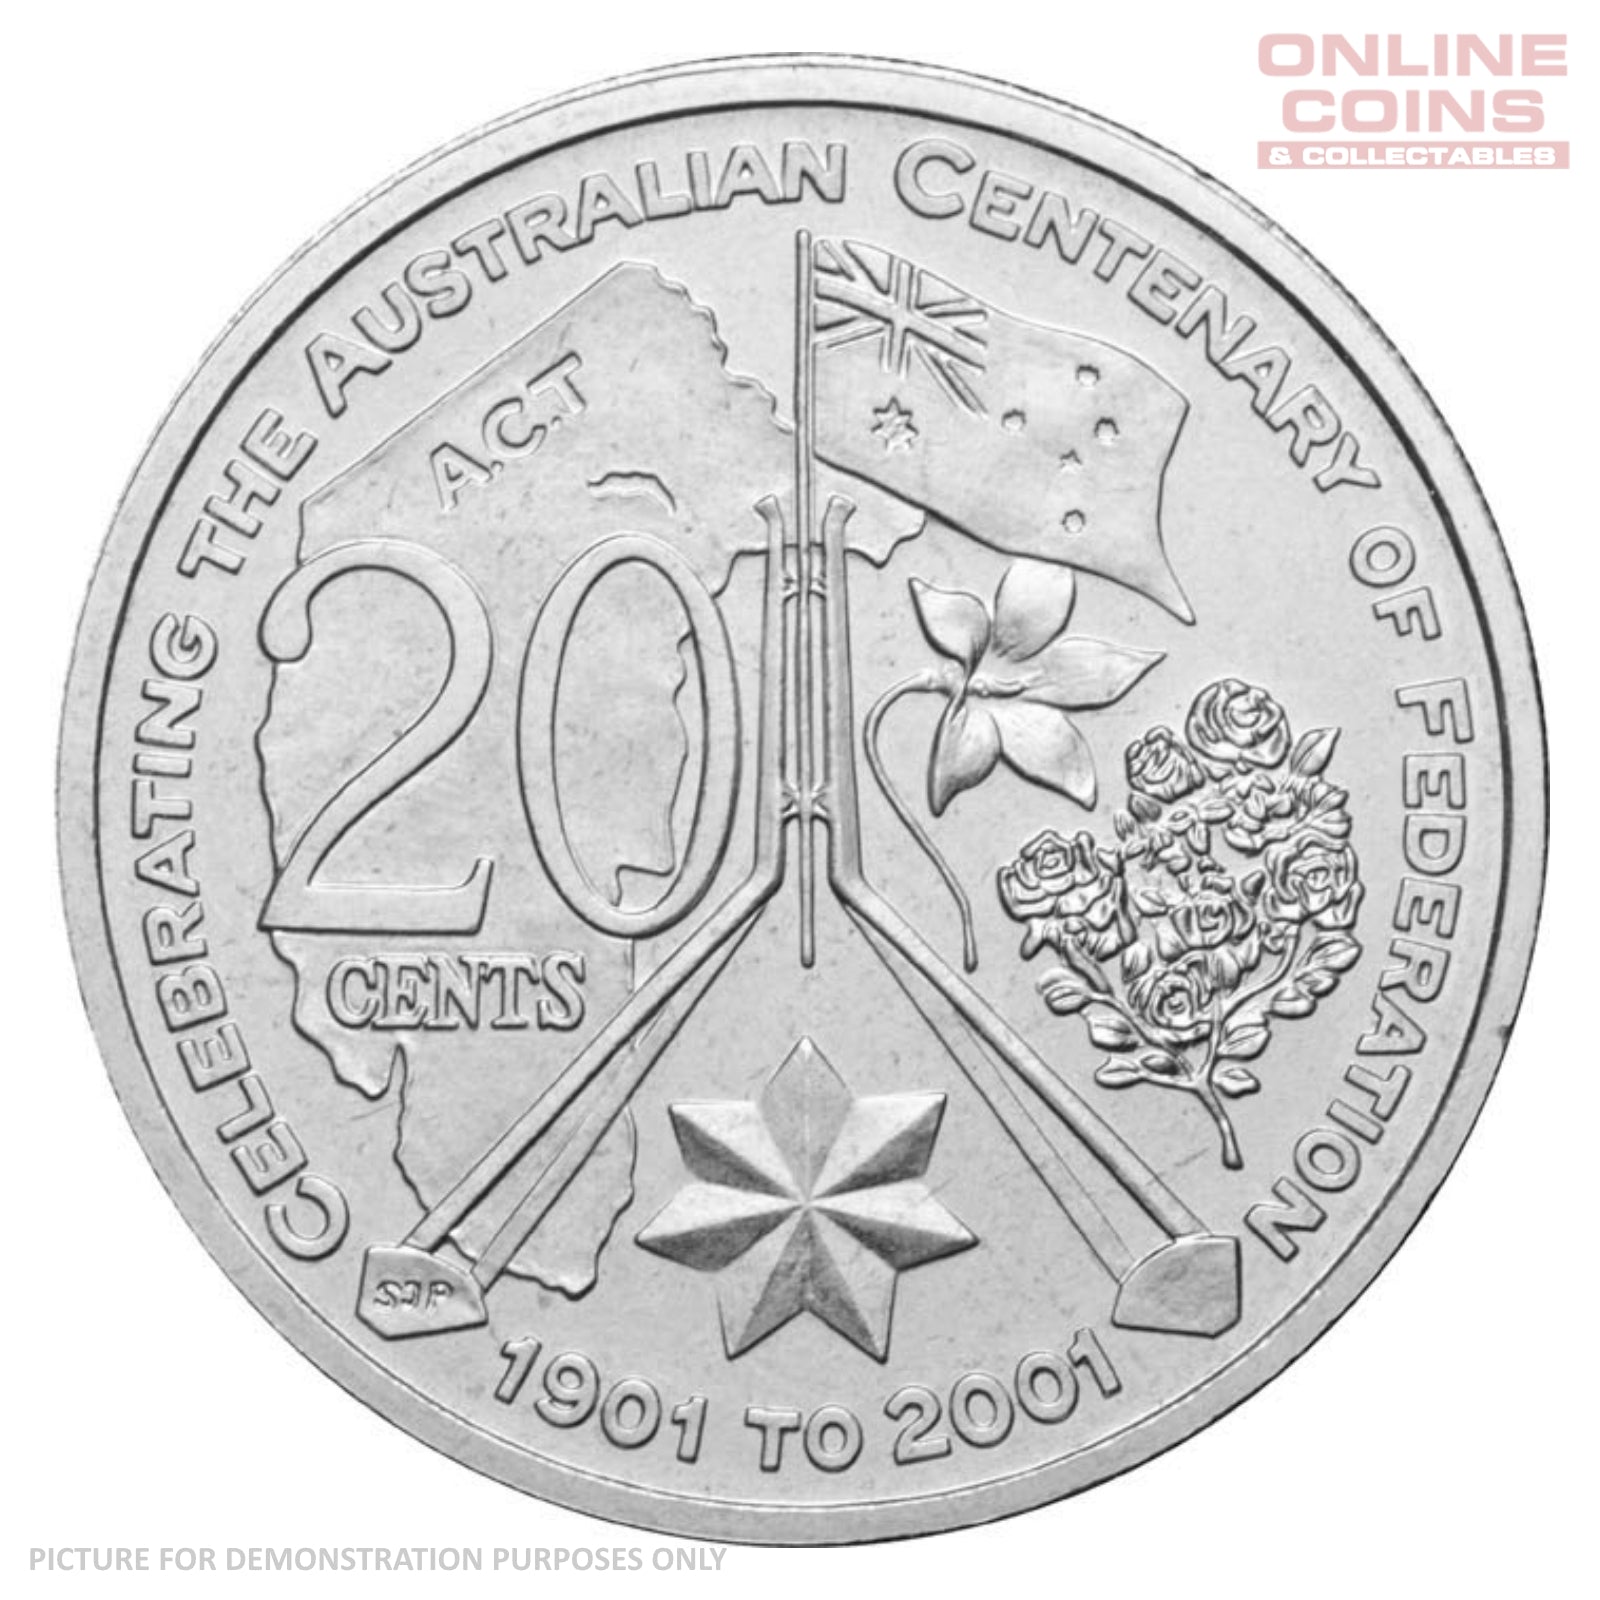 2001 RAM Centenary of Federation 20c Circulating Coin - AUSTRALIA CAPITAL TERRITORY